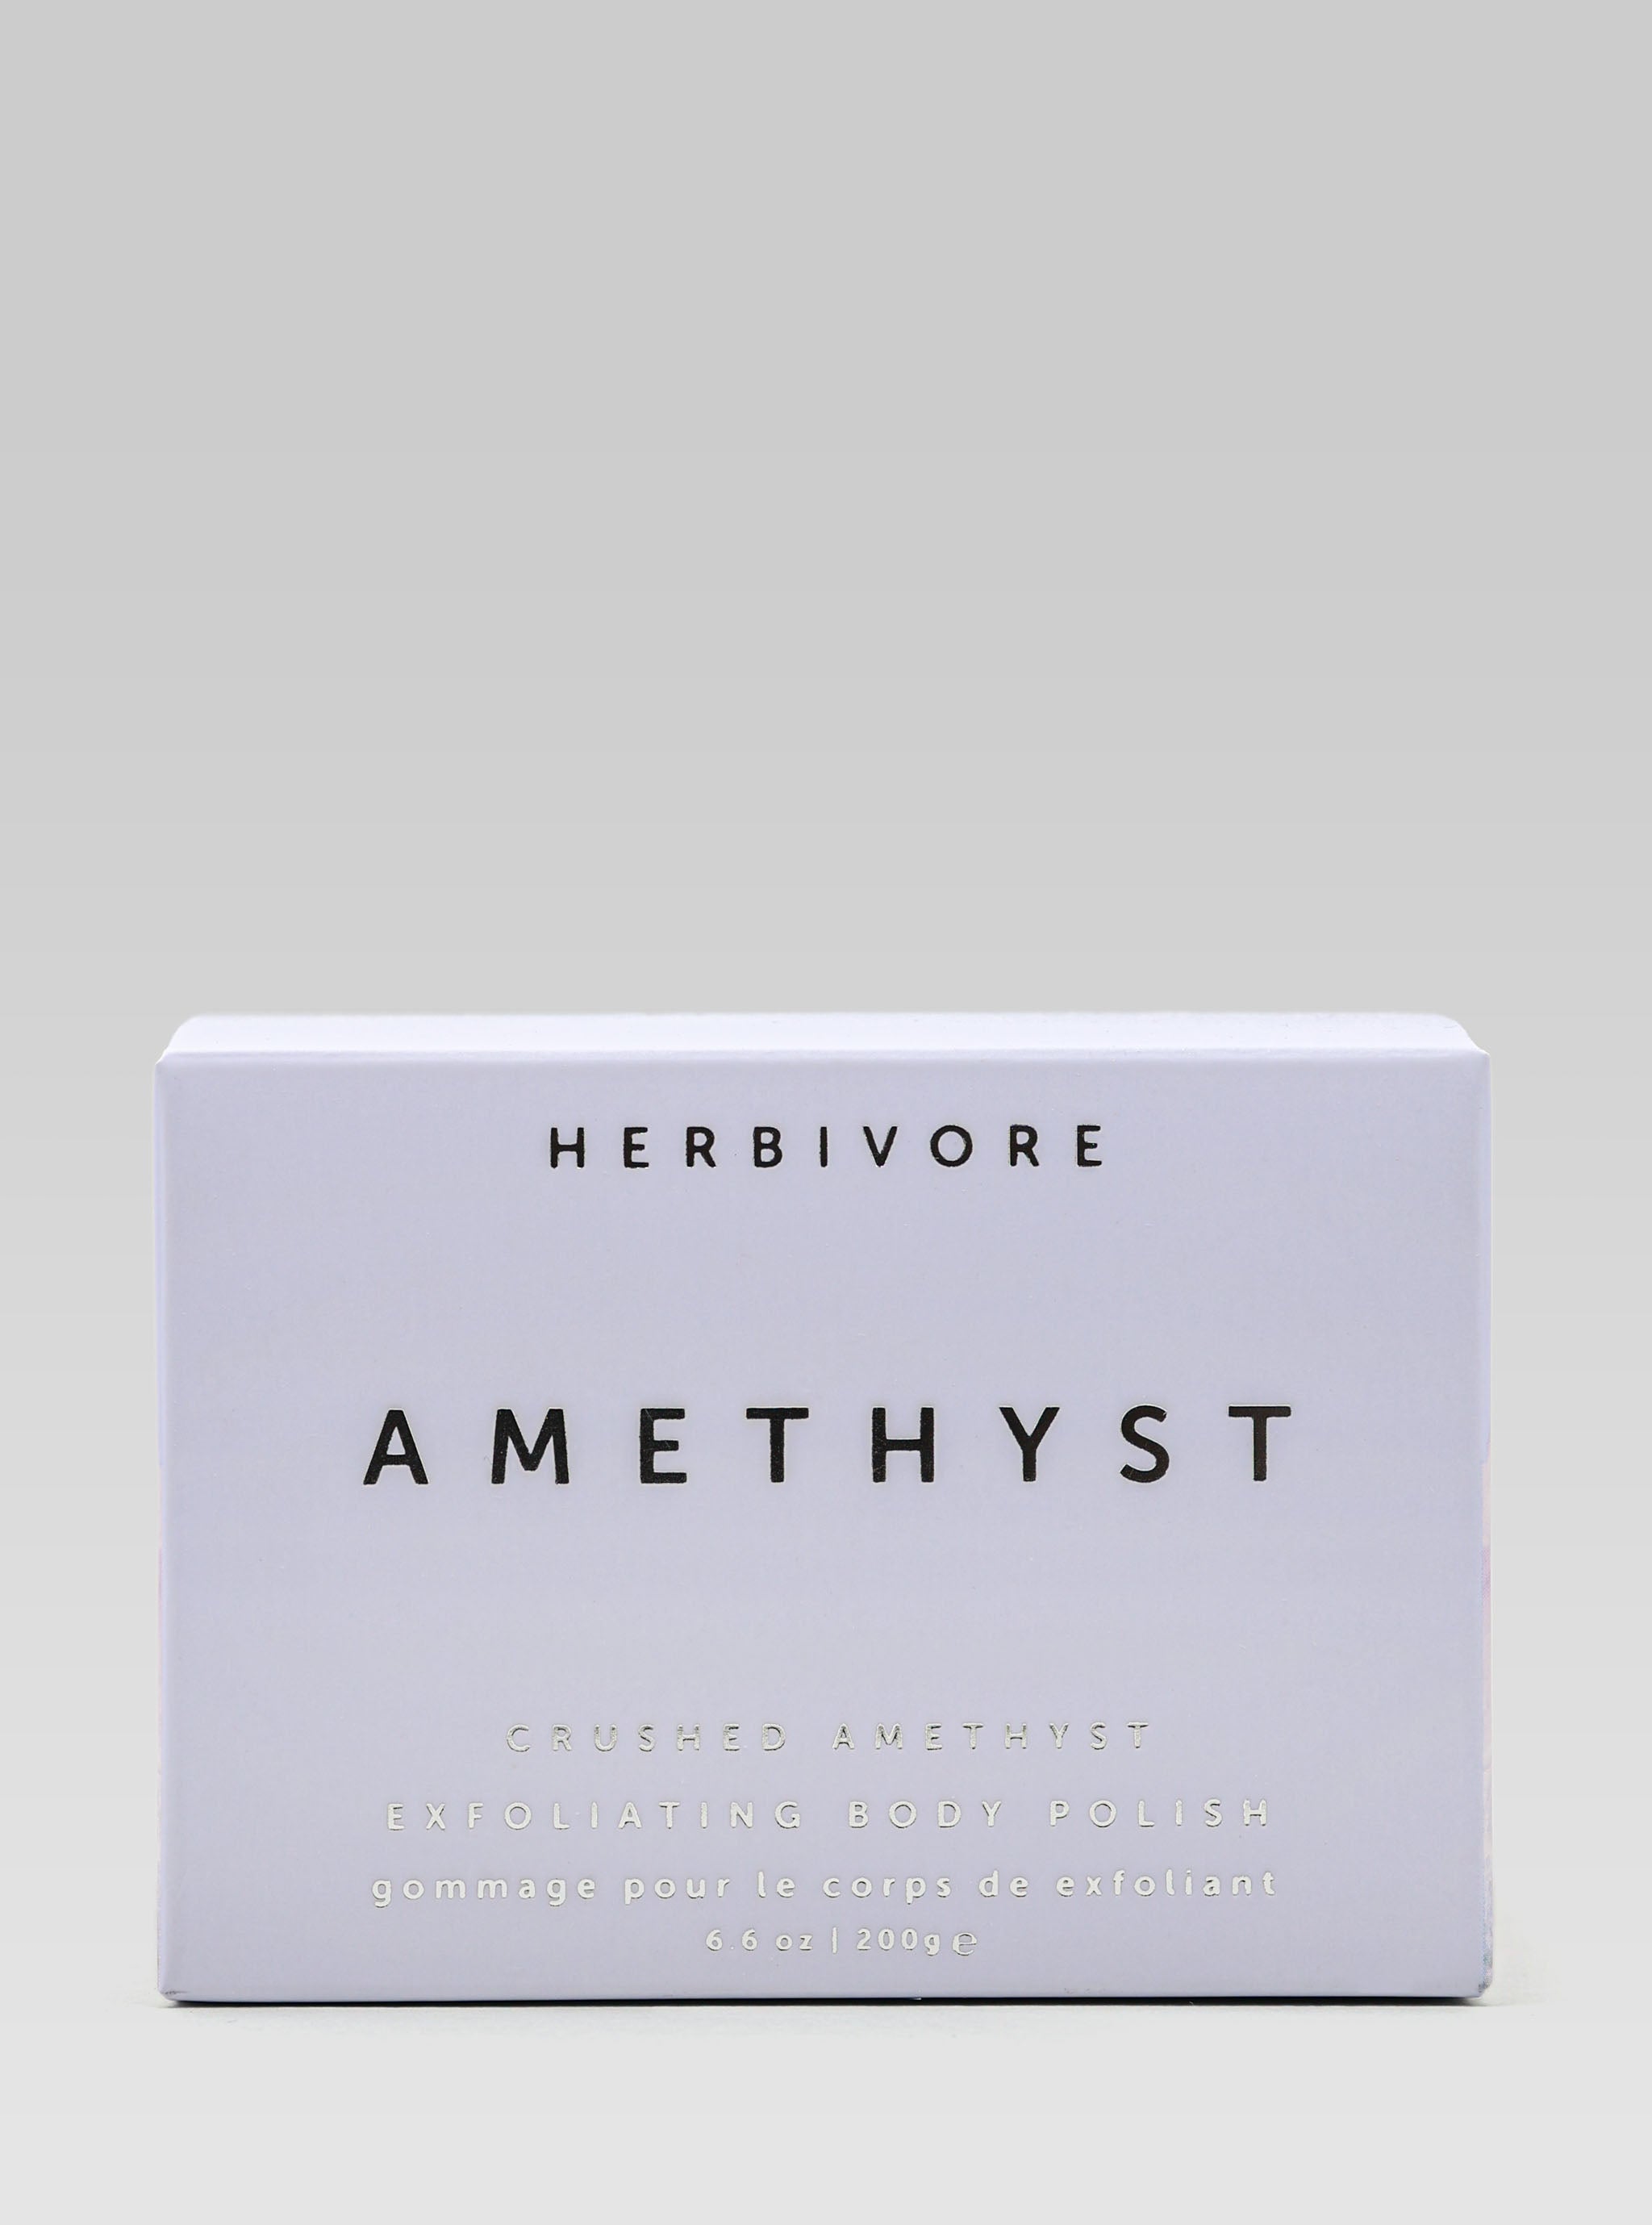 HERBIVORE BOTANICALS Amethyst Exfoliating Body Polish Packaging